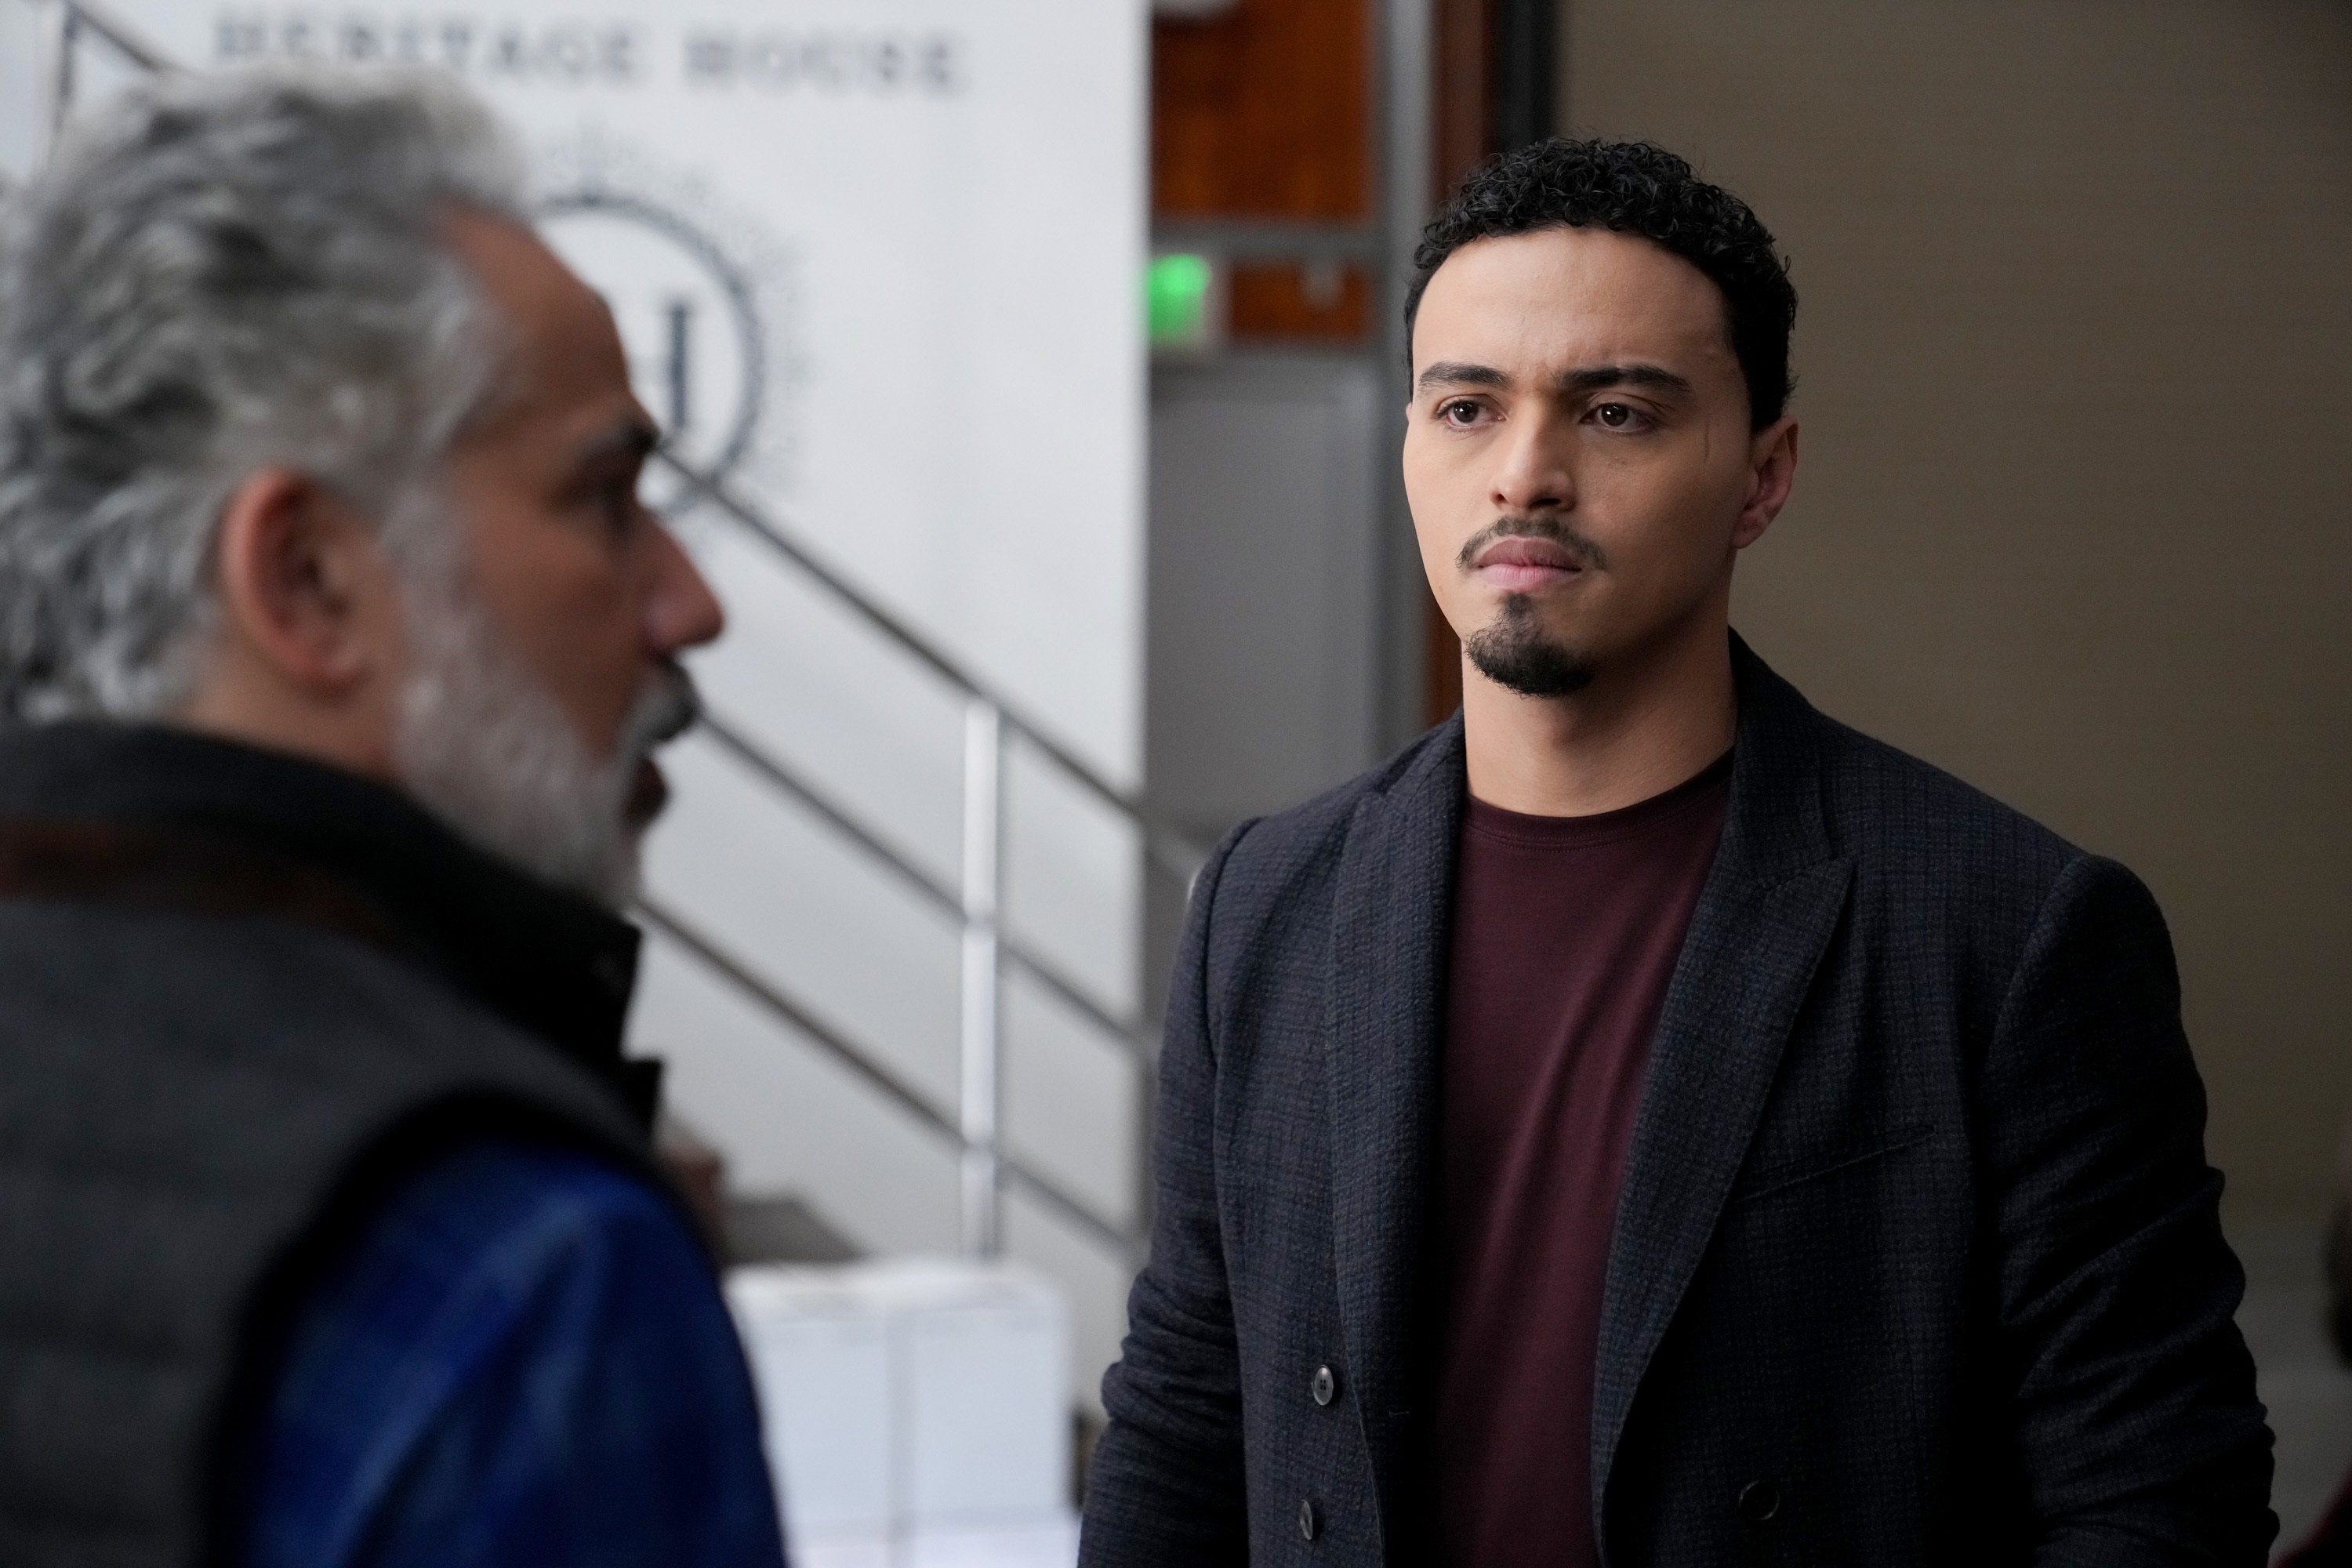 'Promised Land' Episode 3 cast member Tonatiuh portrays Antonio, who looks at his on-screen father, Joe Sandoval (John Ortiz)